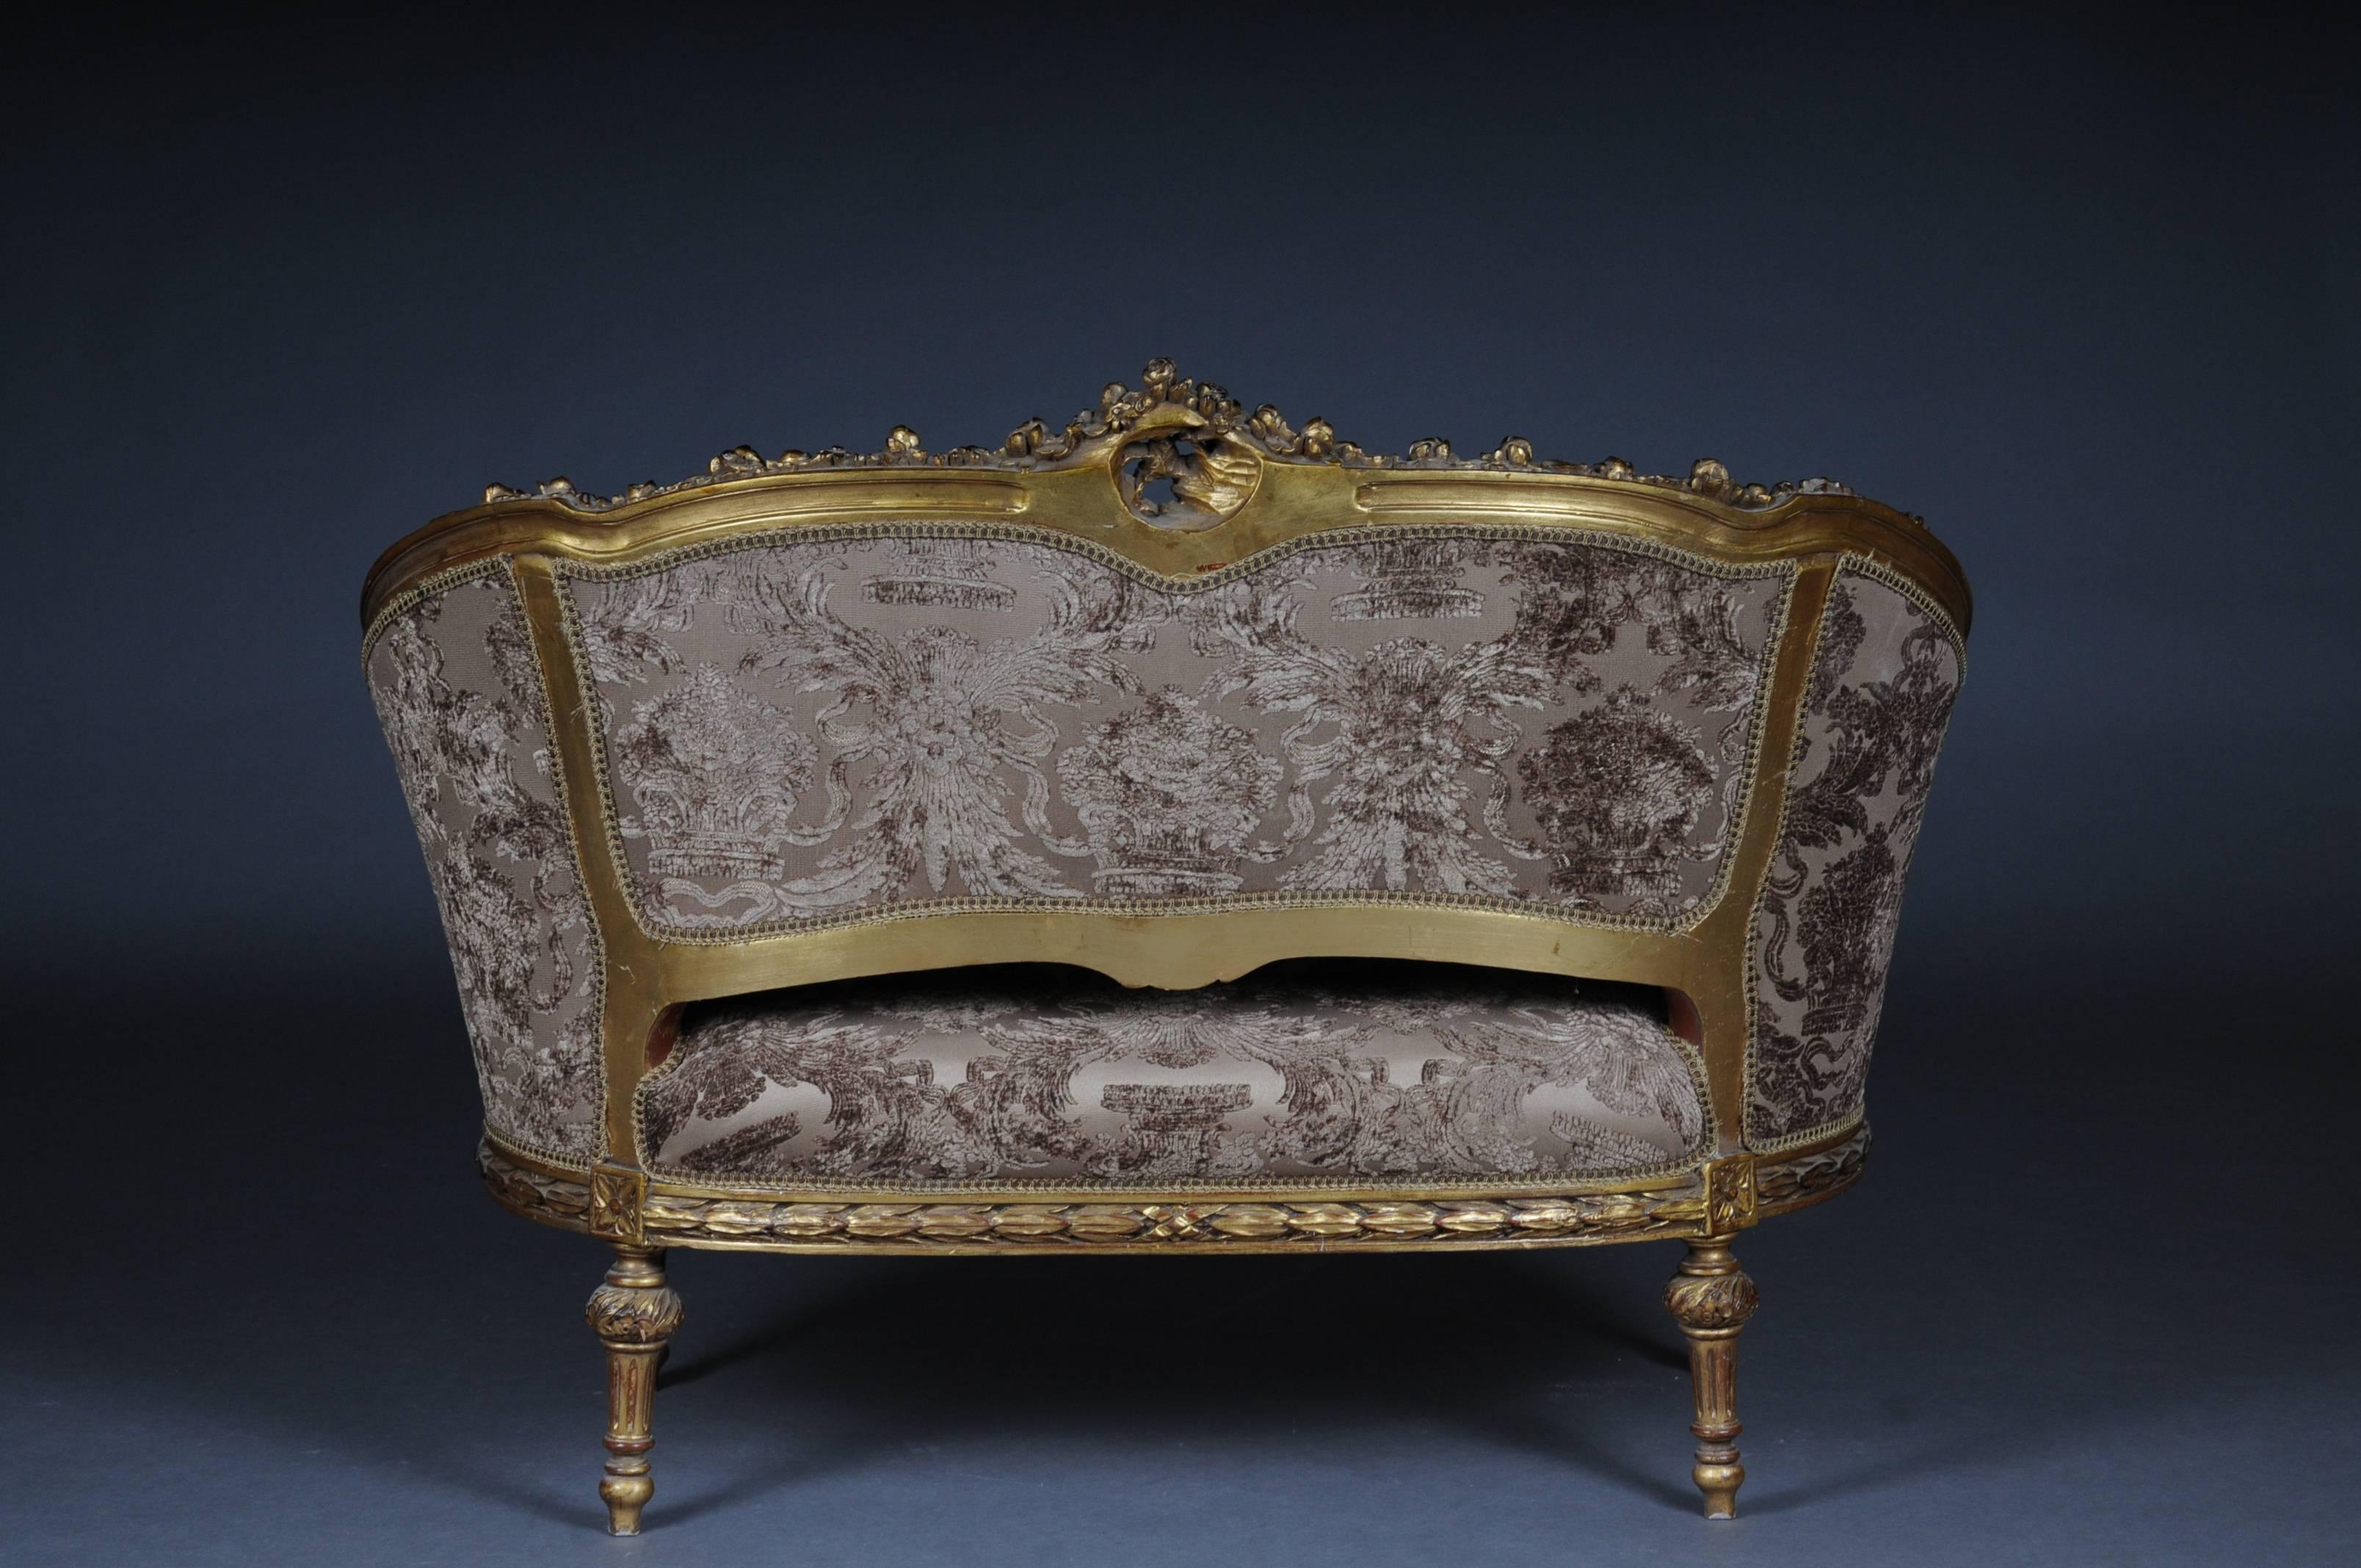 Decorative French Sofa, Canapé in Louis XVI Seize 4